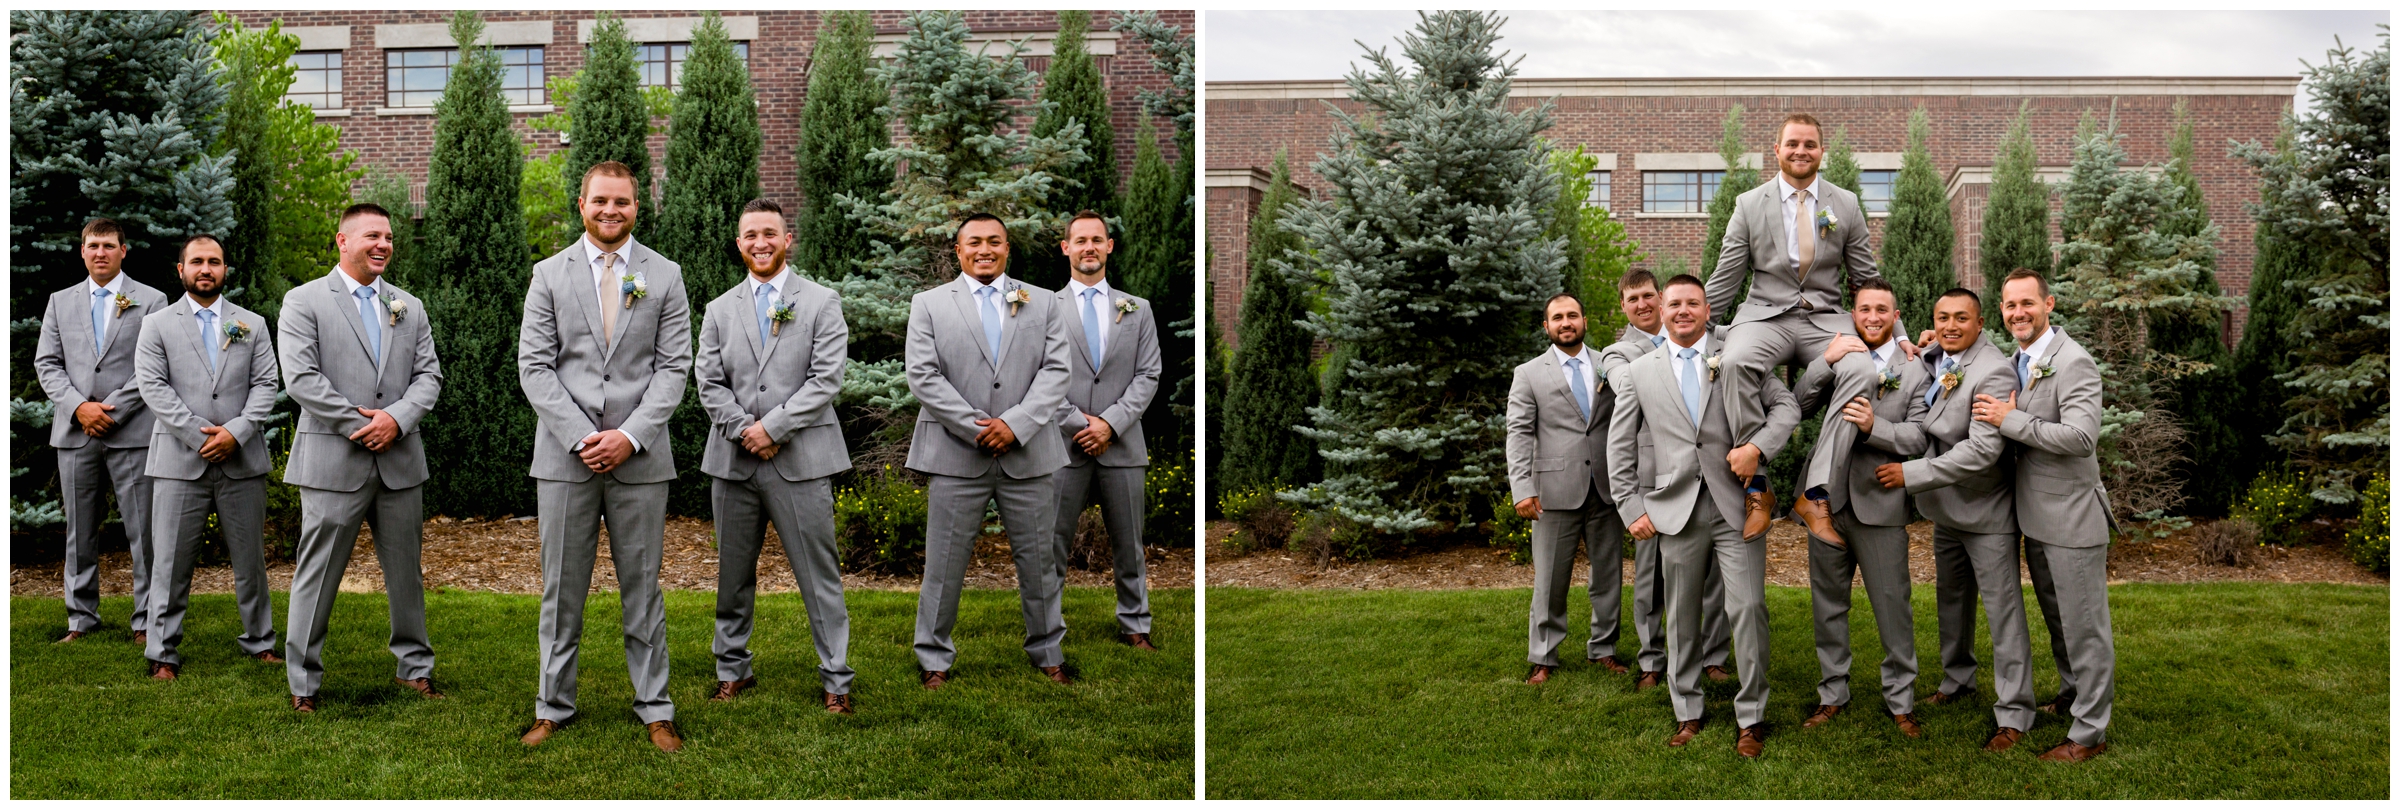 groomsmen lifting groom at outdoor Colorado wedding 